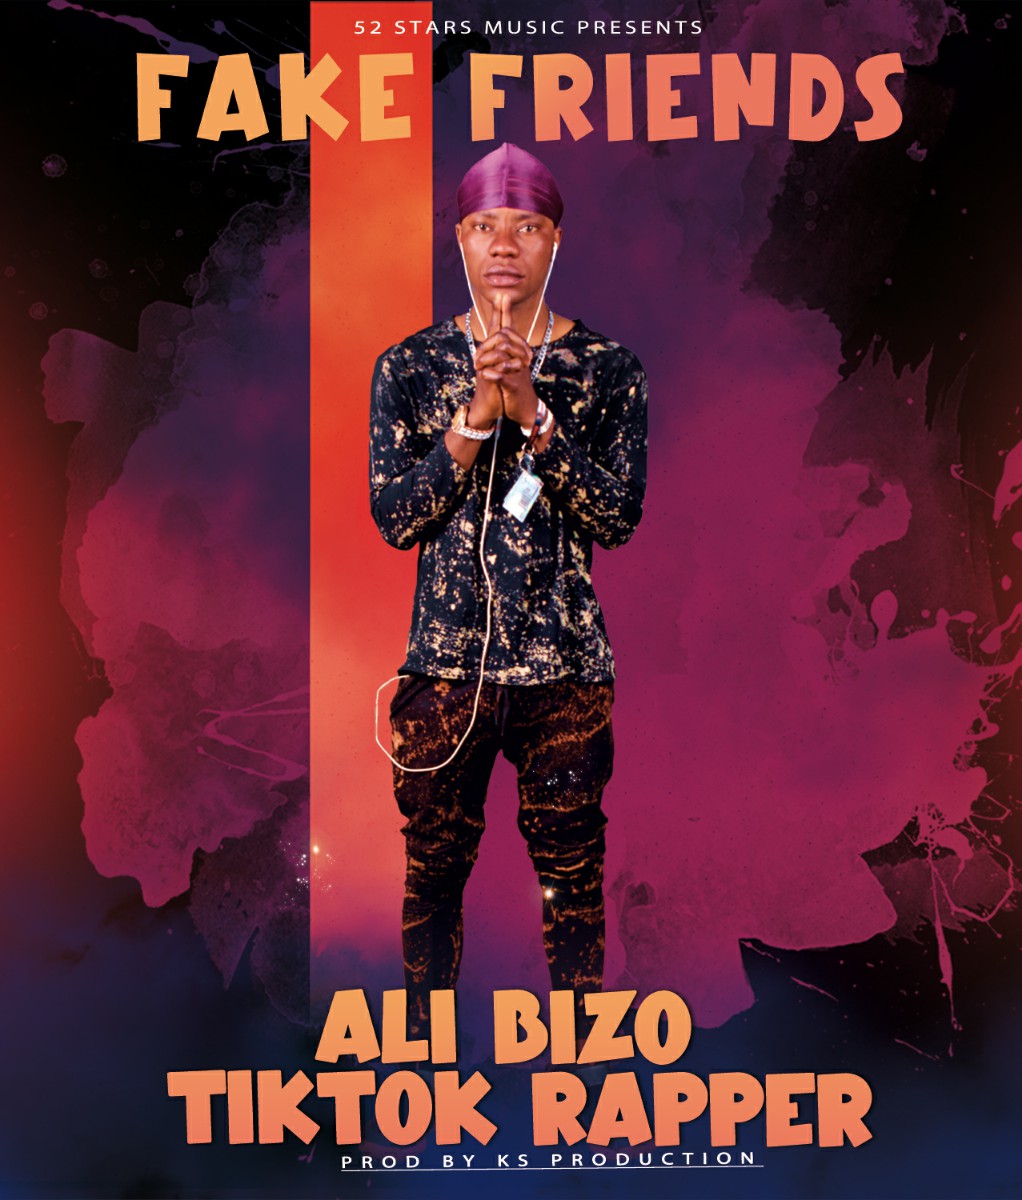 Ali Bizo TikTok Rapper - Fake Friends